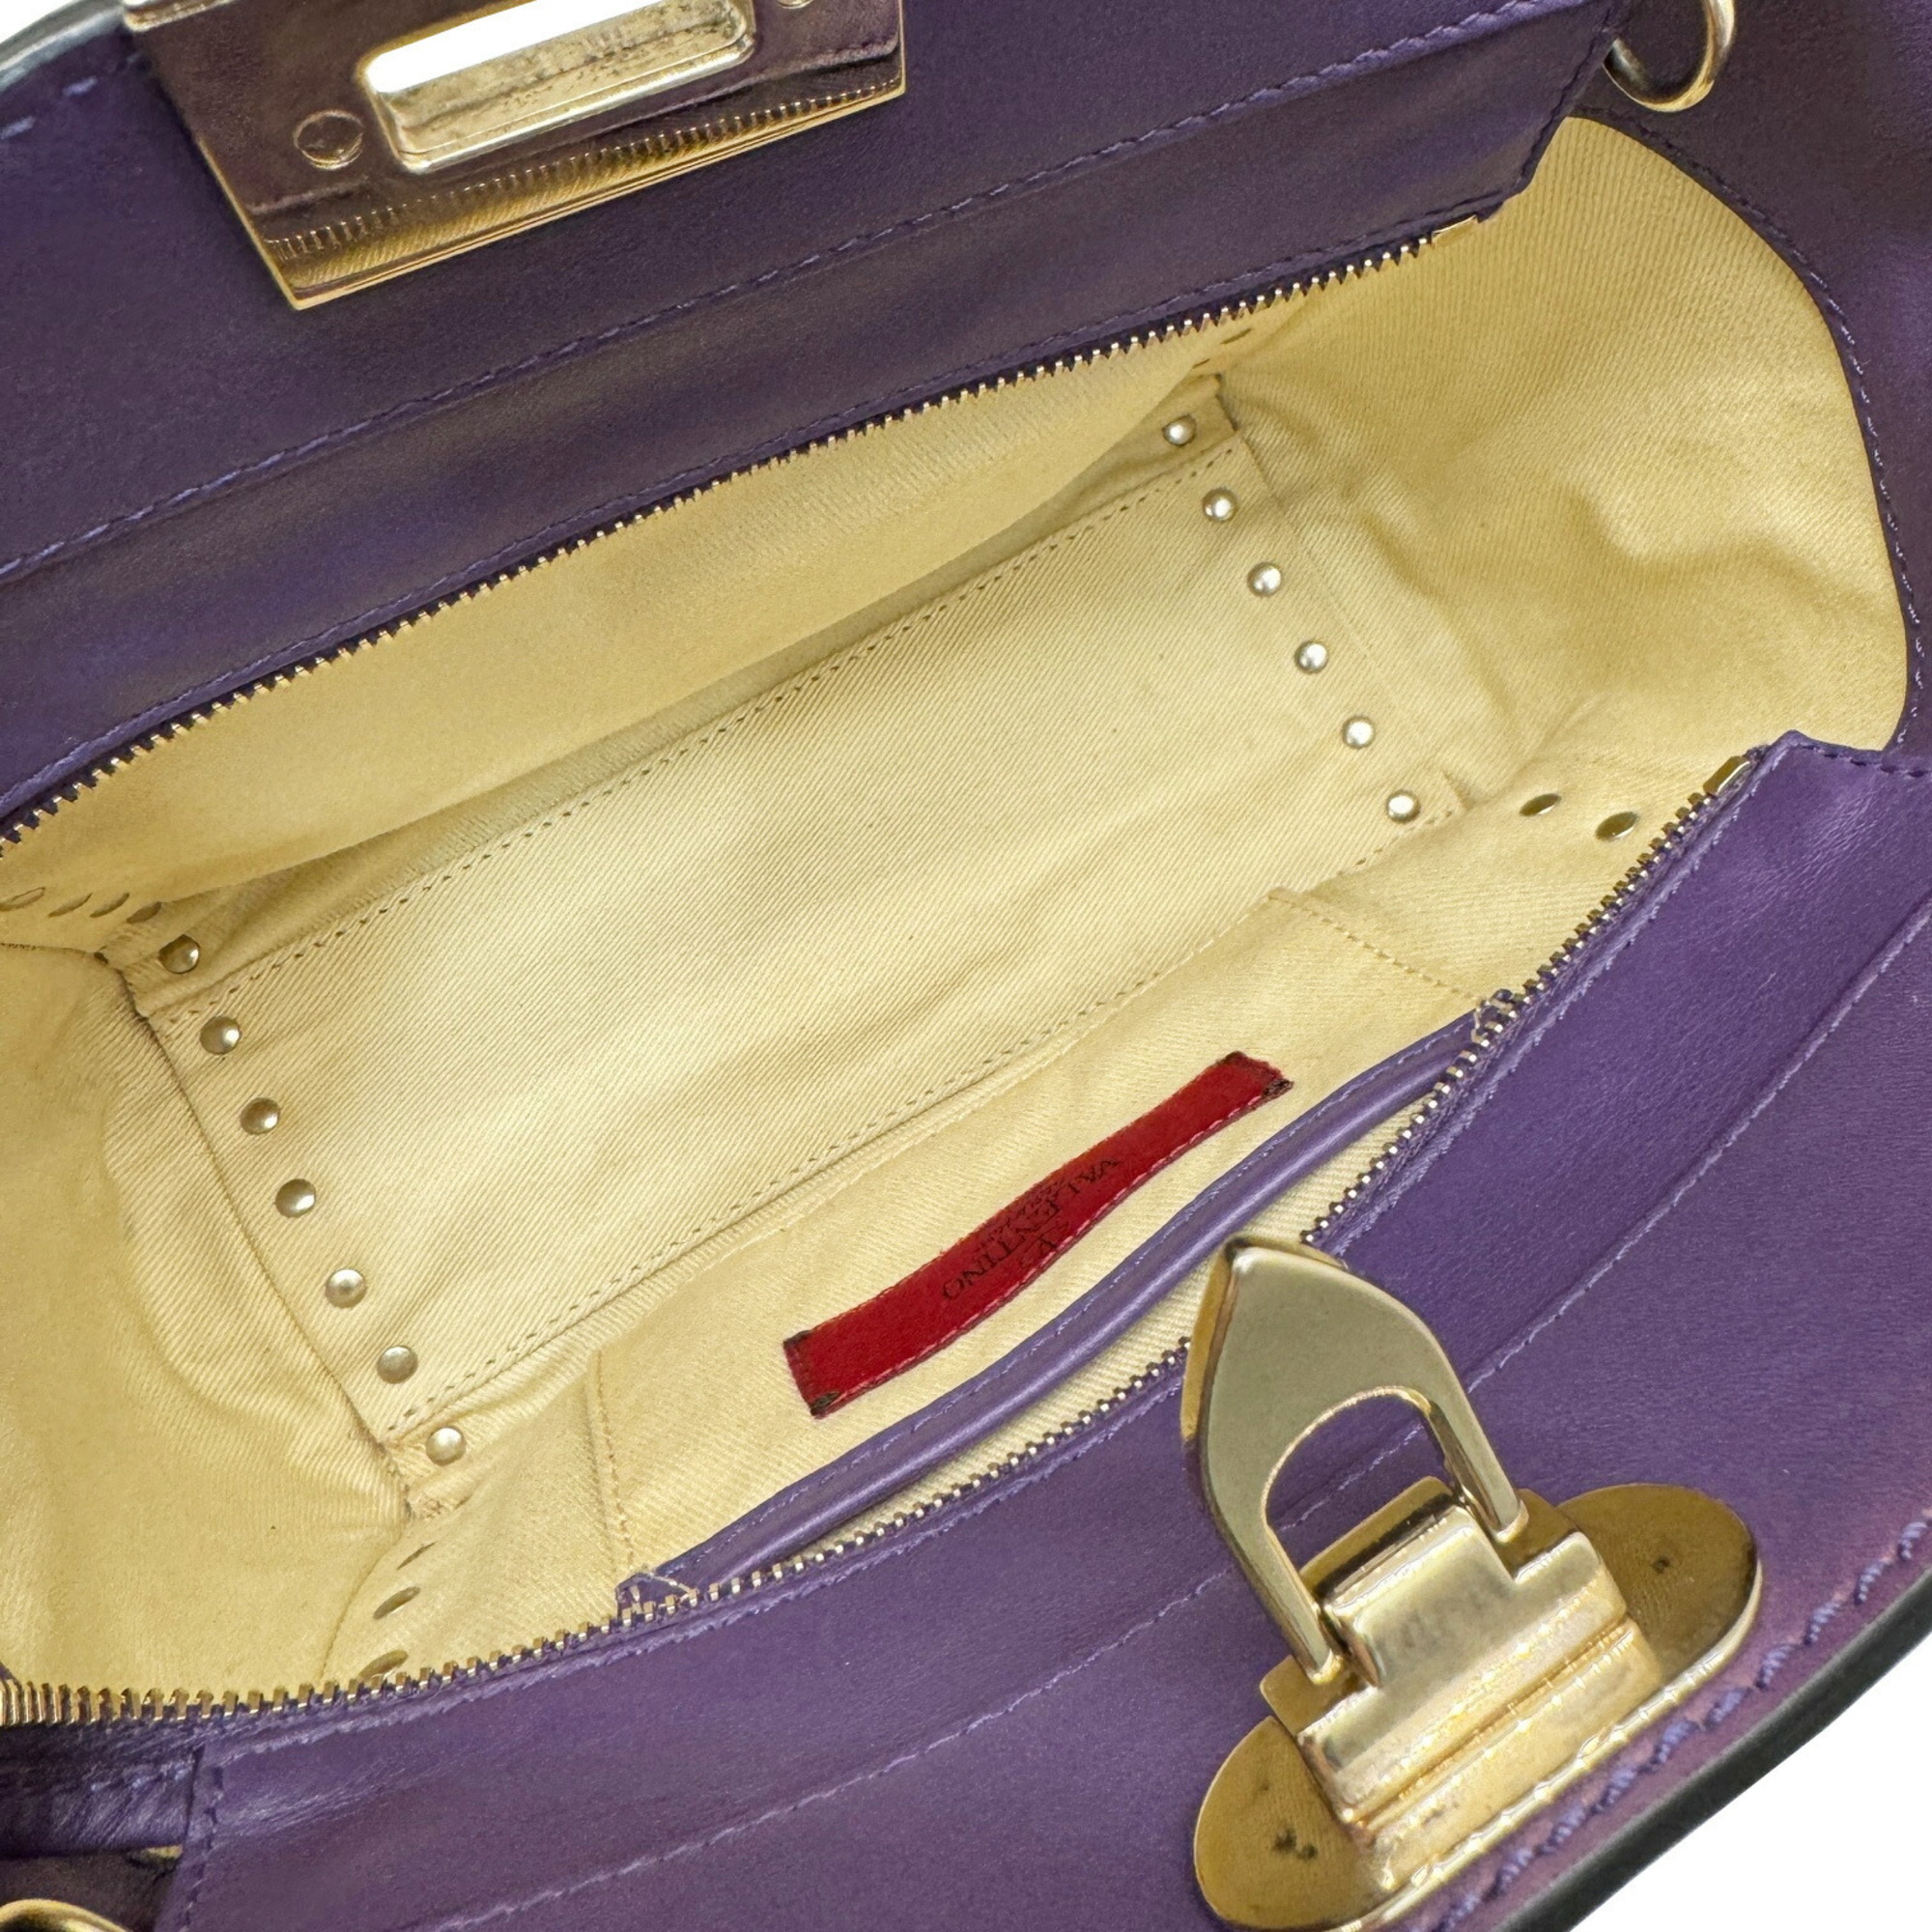 VALENTINO GARAVANI Valentino Garavani Rockstud Shoulder Bag Tote Handbag Small Purple Leather Women's